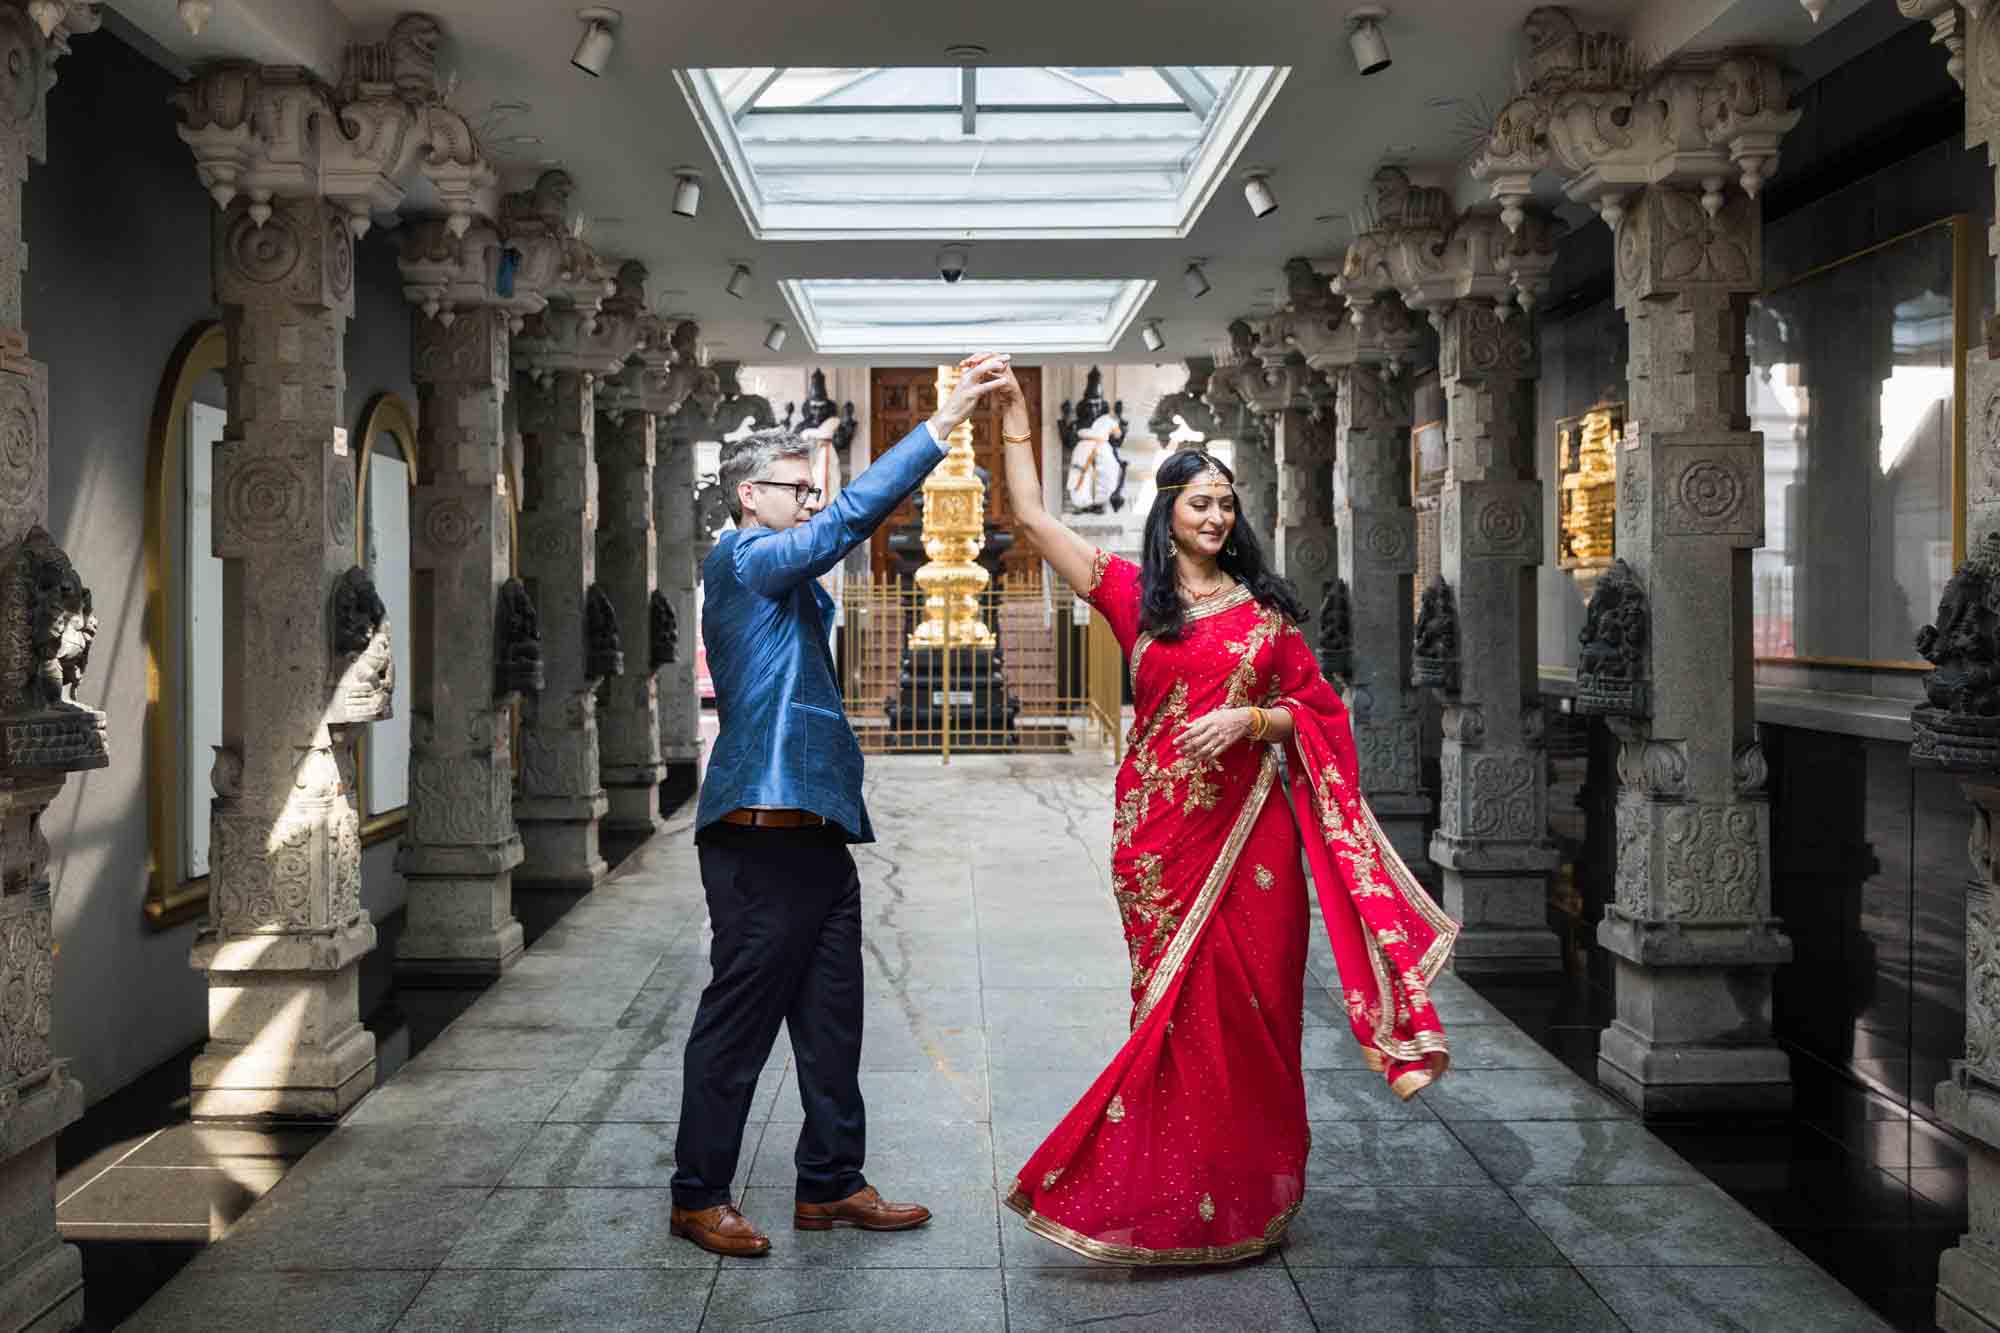 Hindu Temple Society of North America wedding photos of groom in blue jacket twirling bride wearing red sari